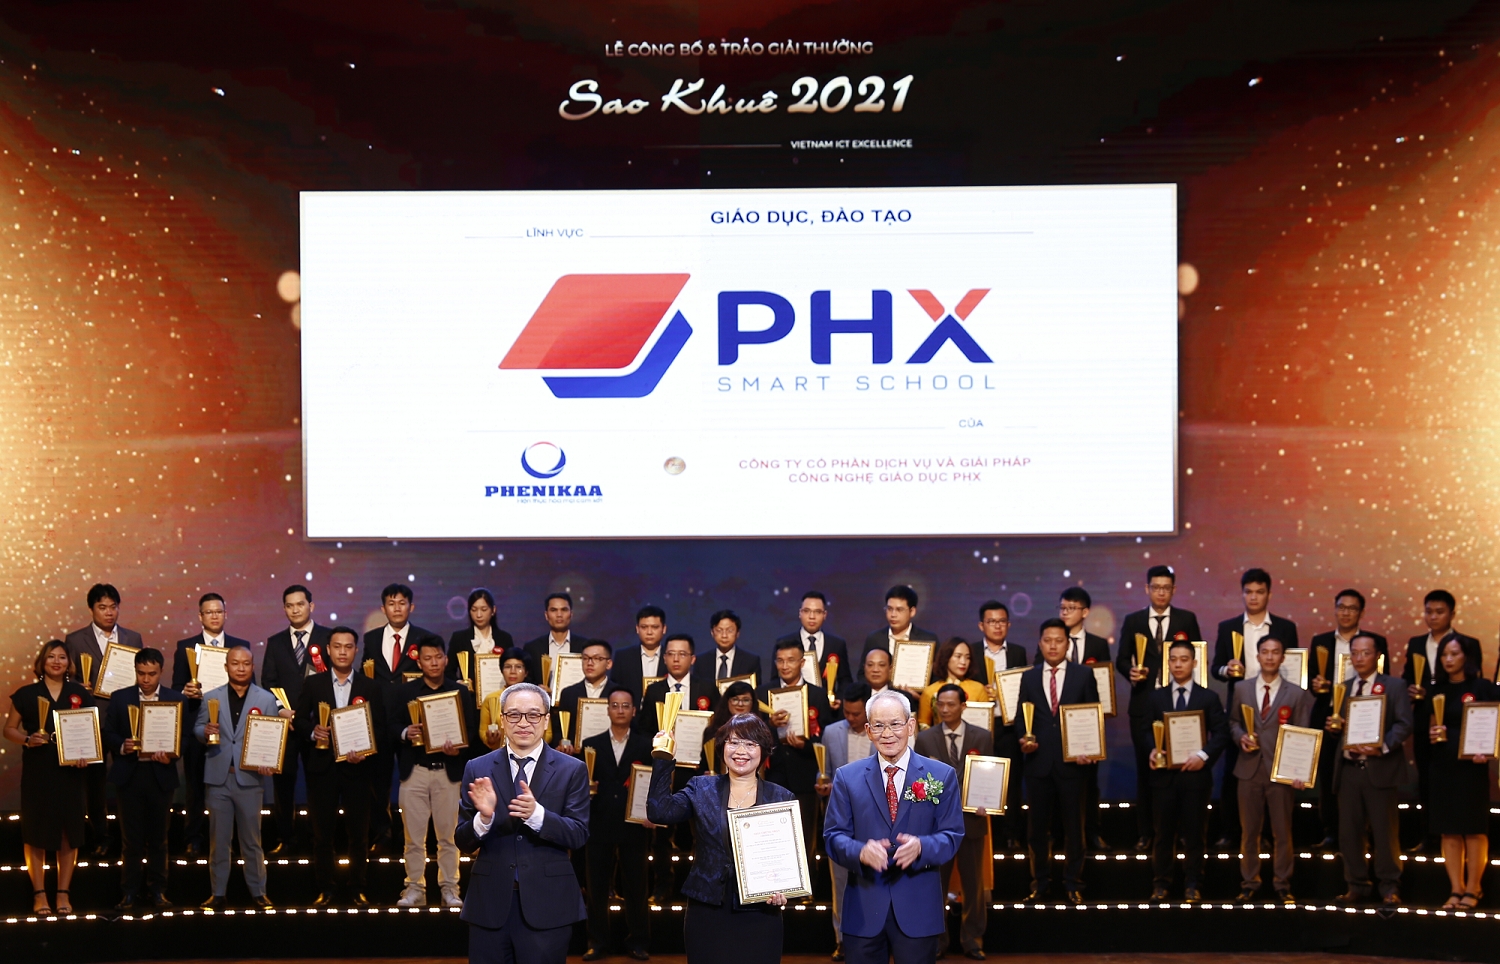 Smart education management app PHX Smart School wins Sao Khue Award 2021